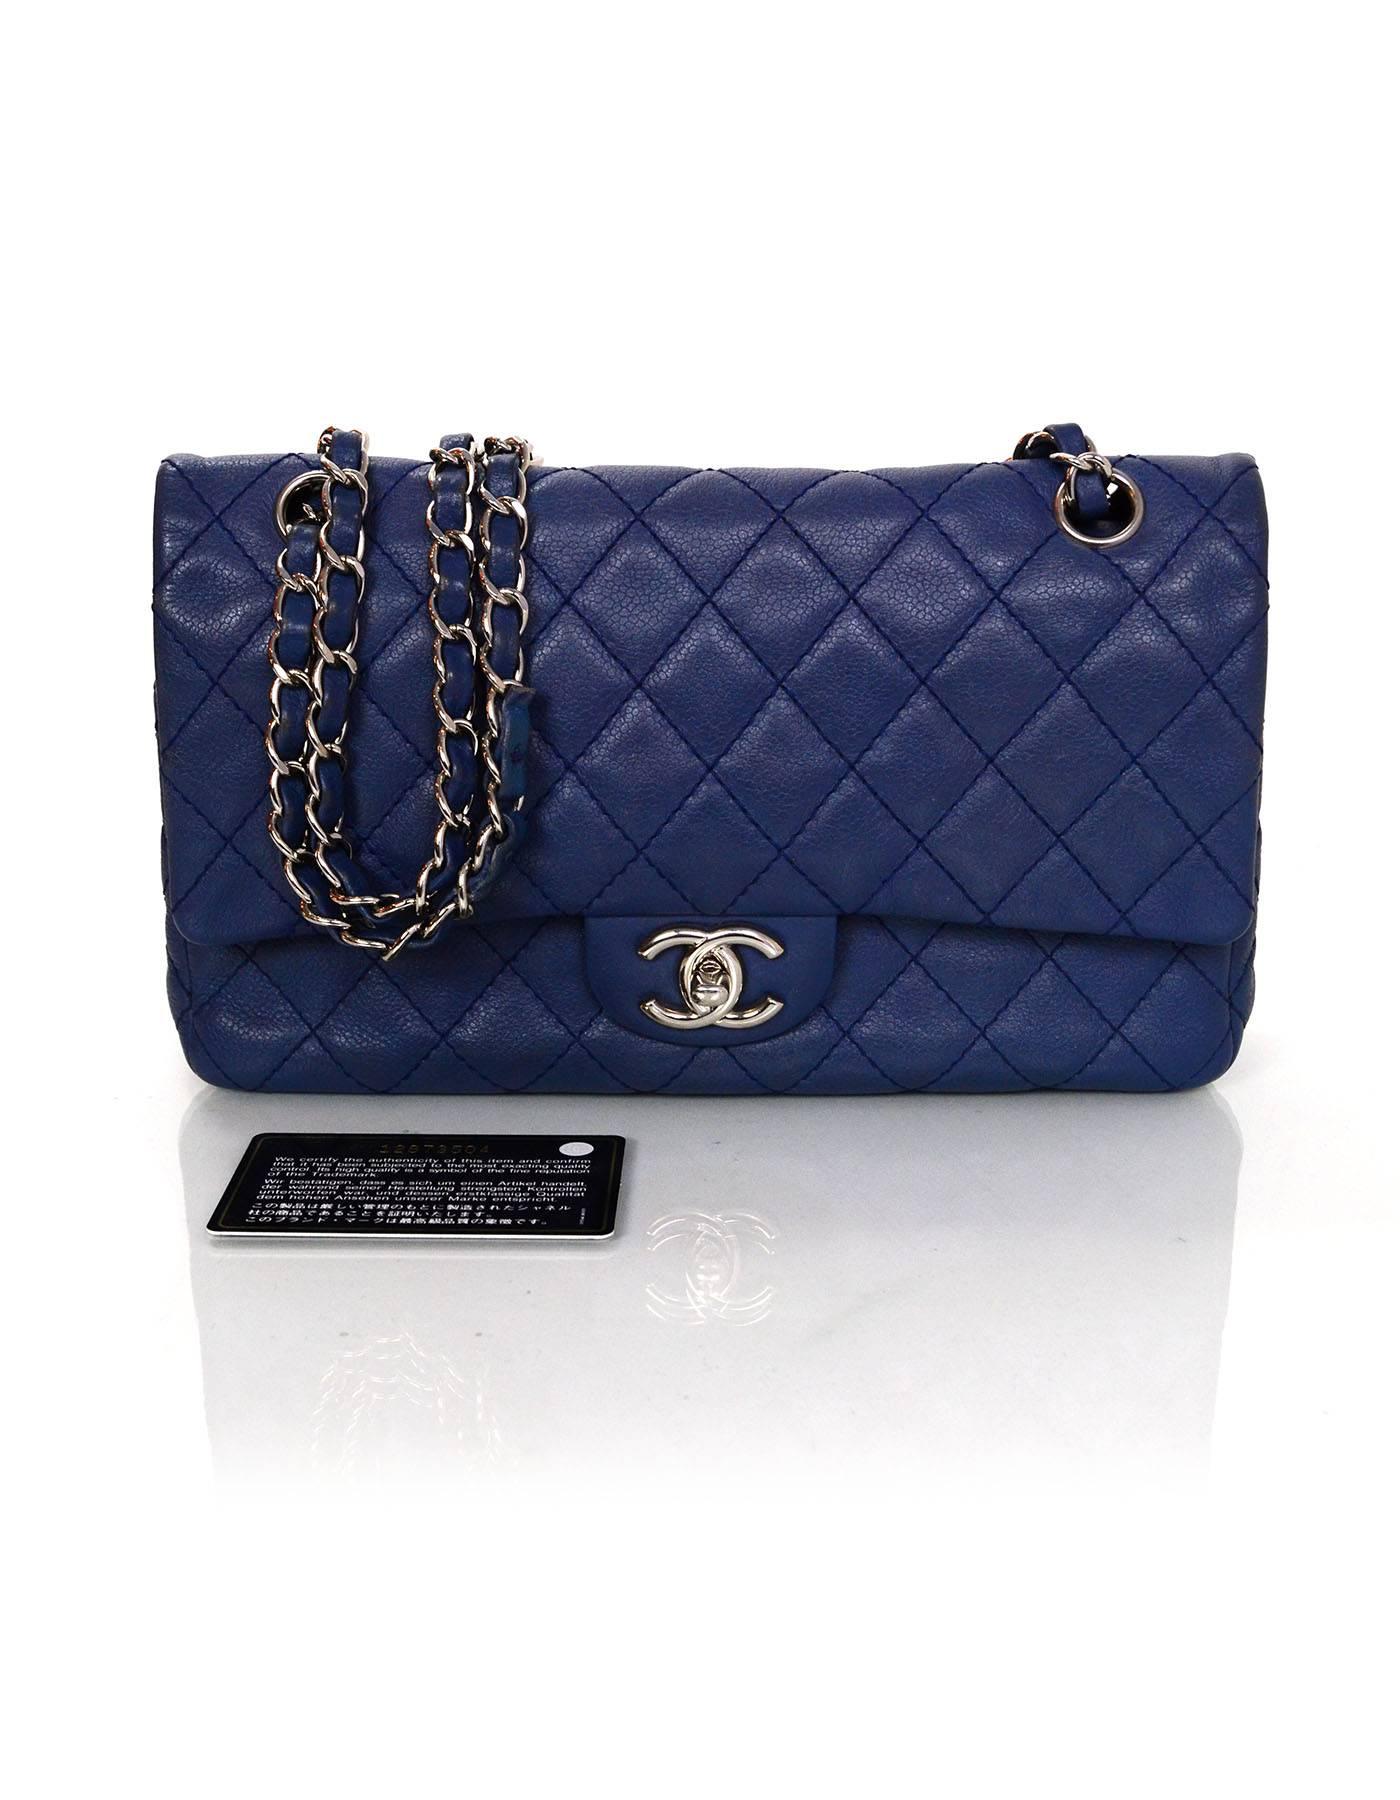 Chanel Blue Caviar Leather 10